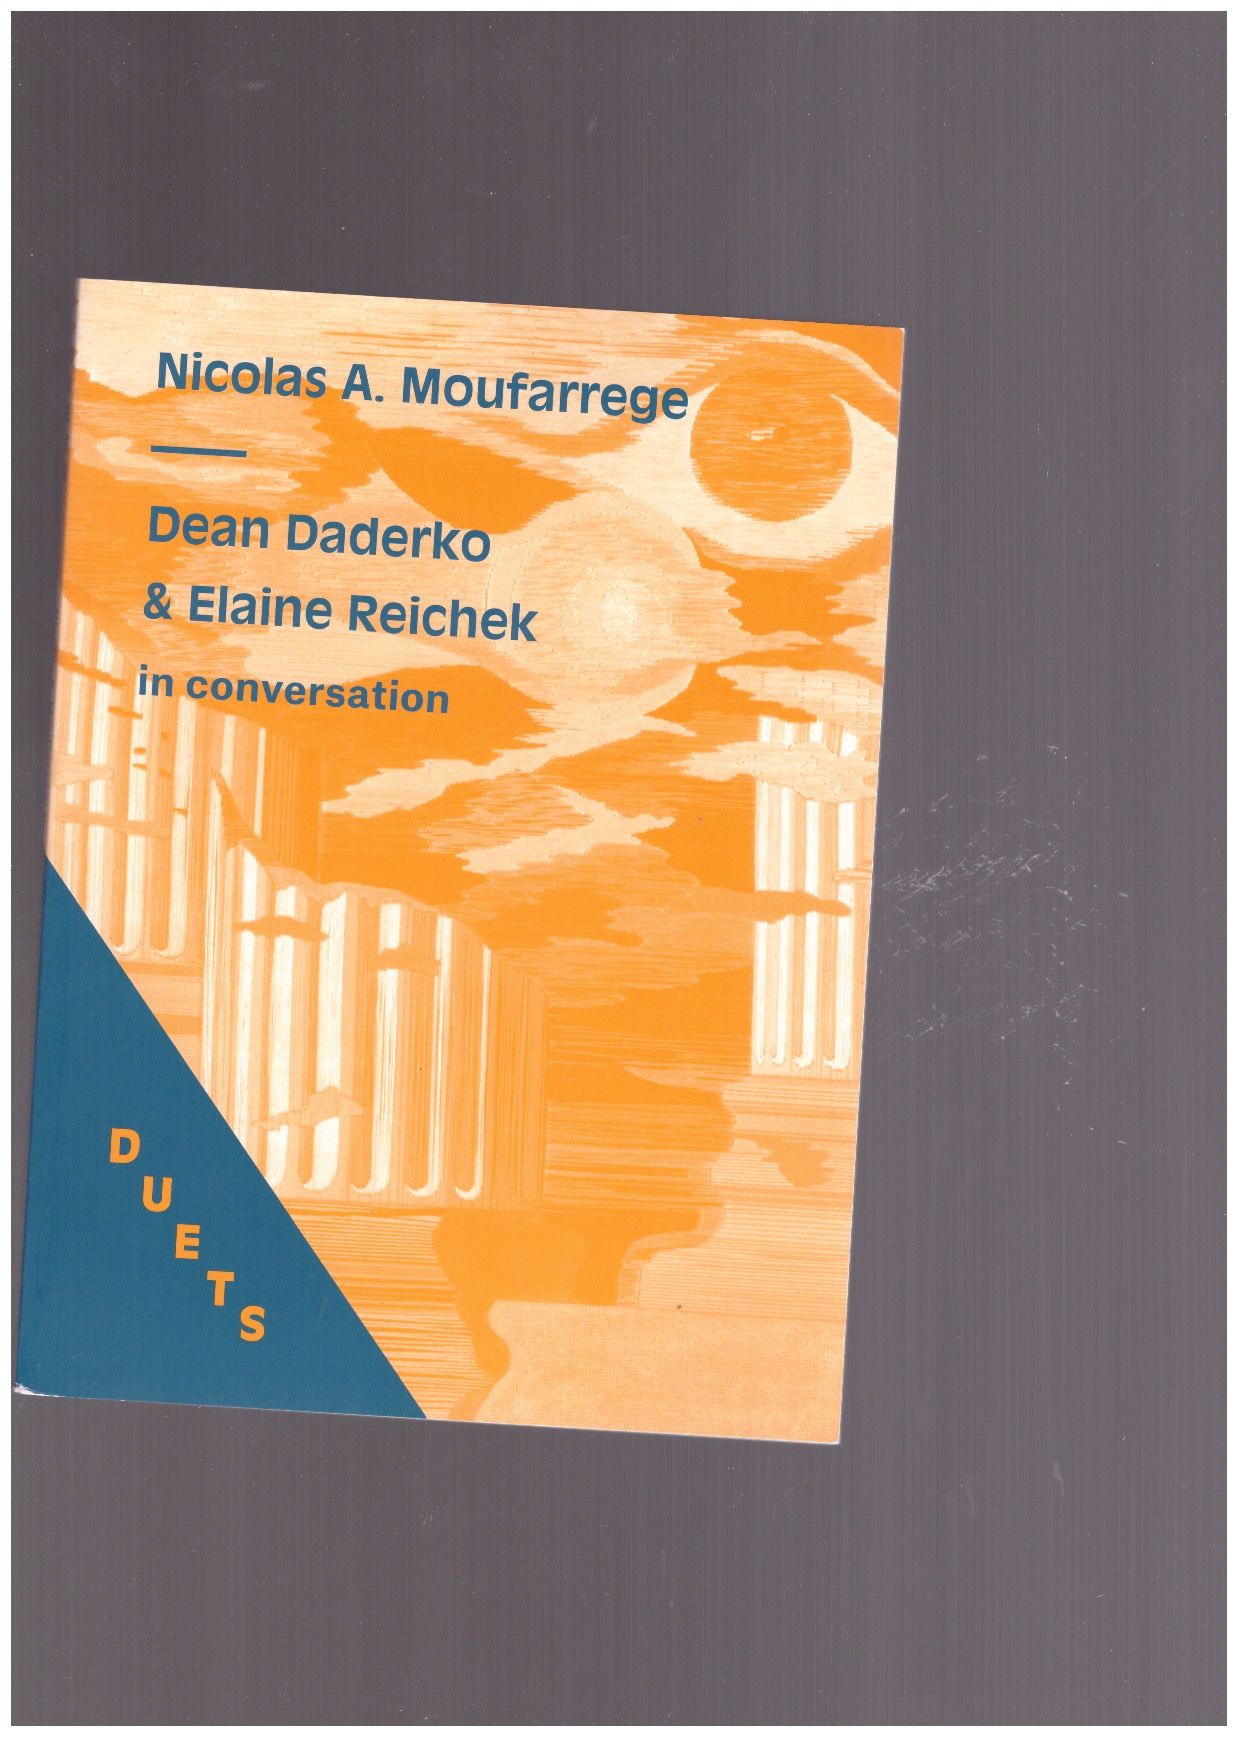 DADERKO, Dean; REICHEK, Elaine - Duets : Nicolas A. Moufarrege